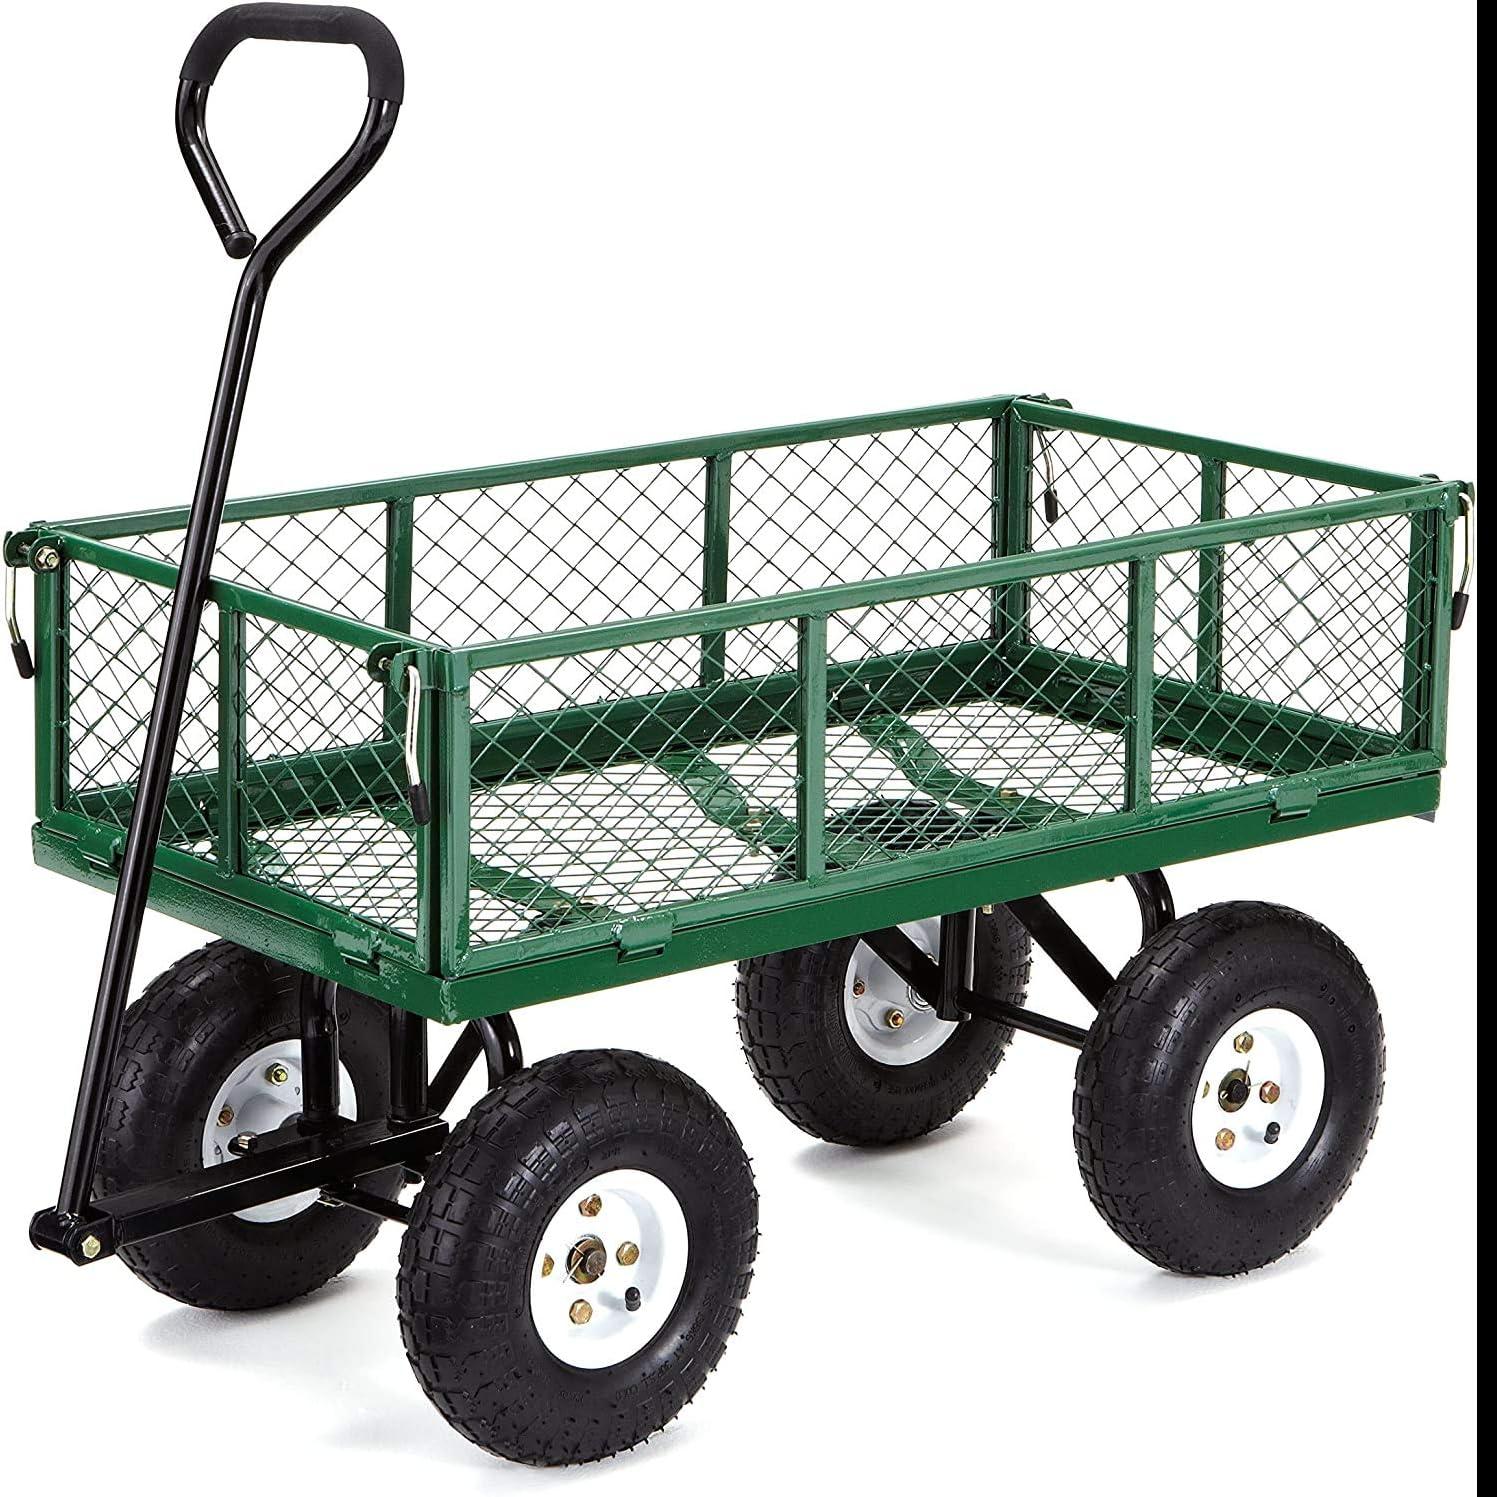 Gorilla Carts Steel Utility Garden Cart for $89 Shipped